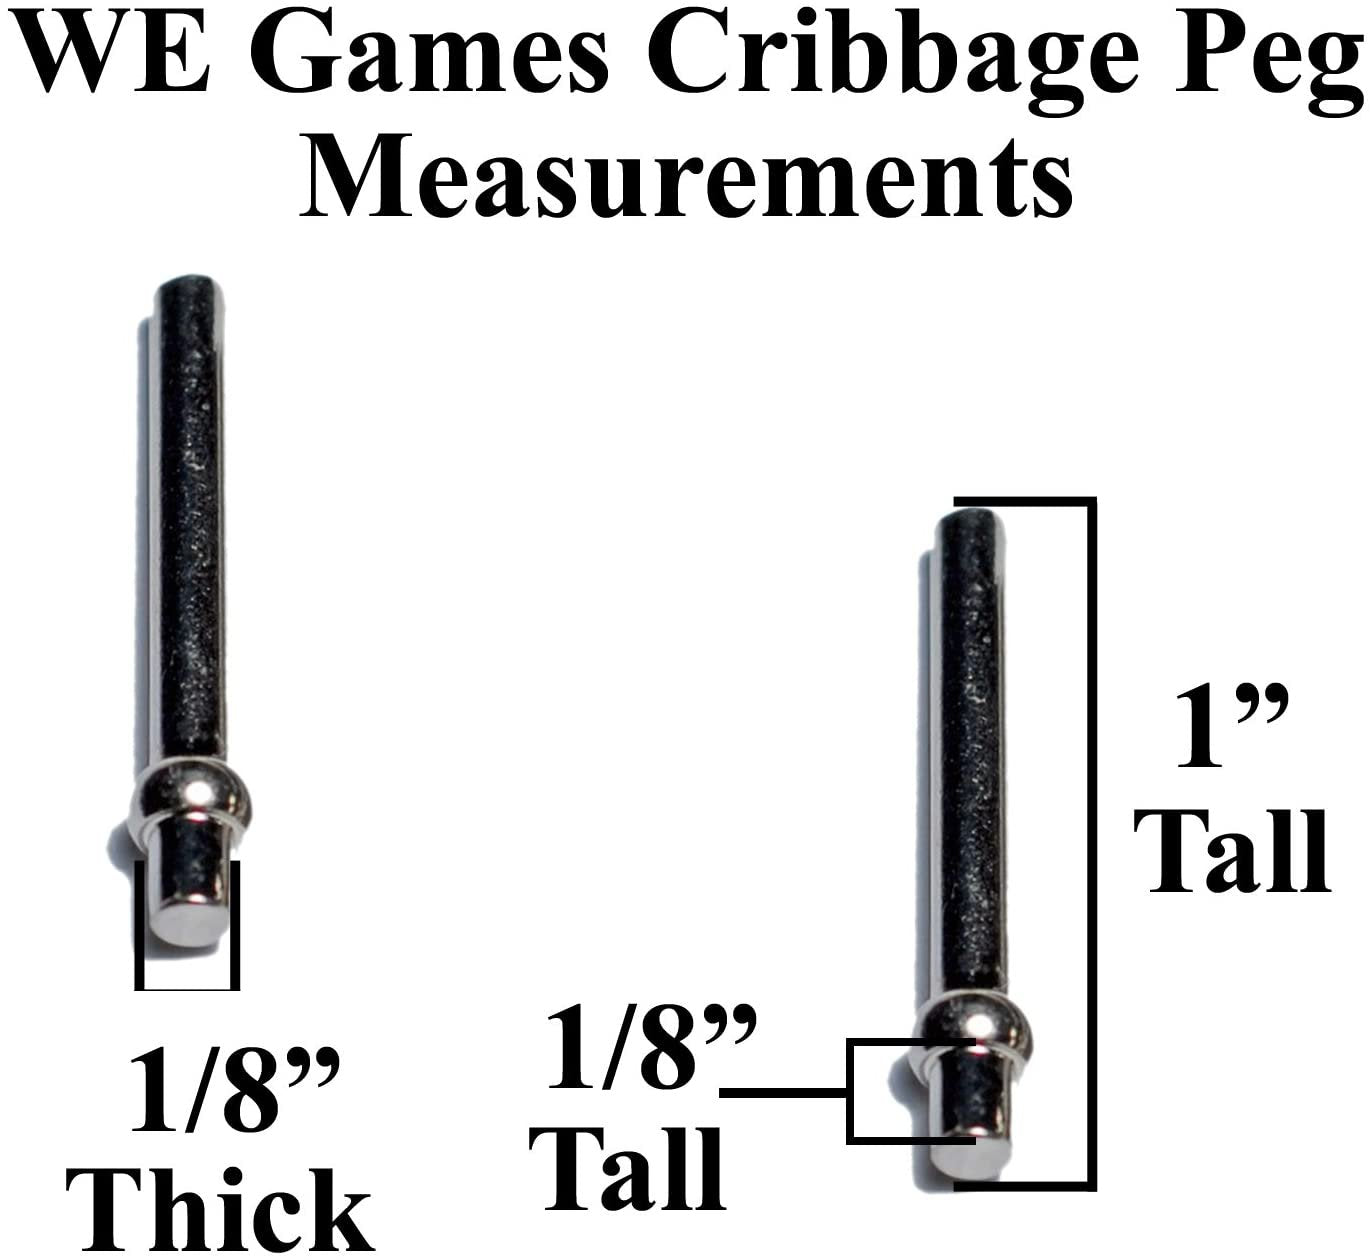 Metal Cribbage Pegs - Mixed Sizes